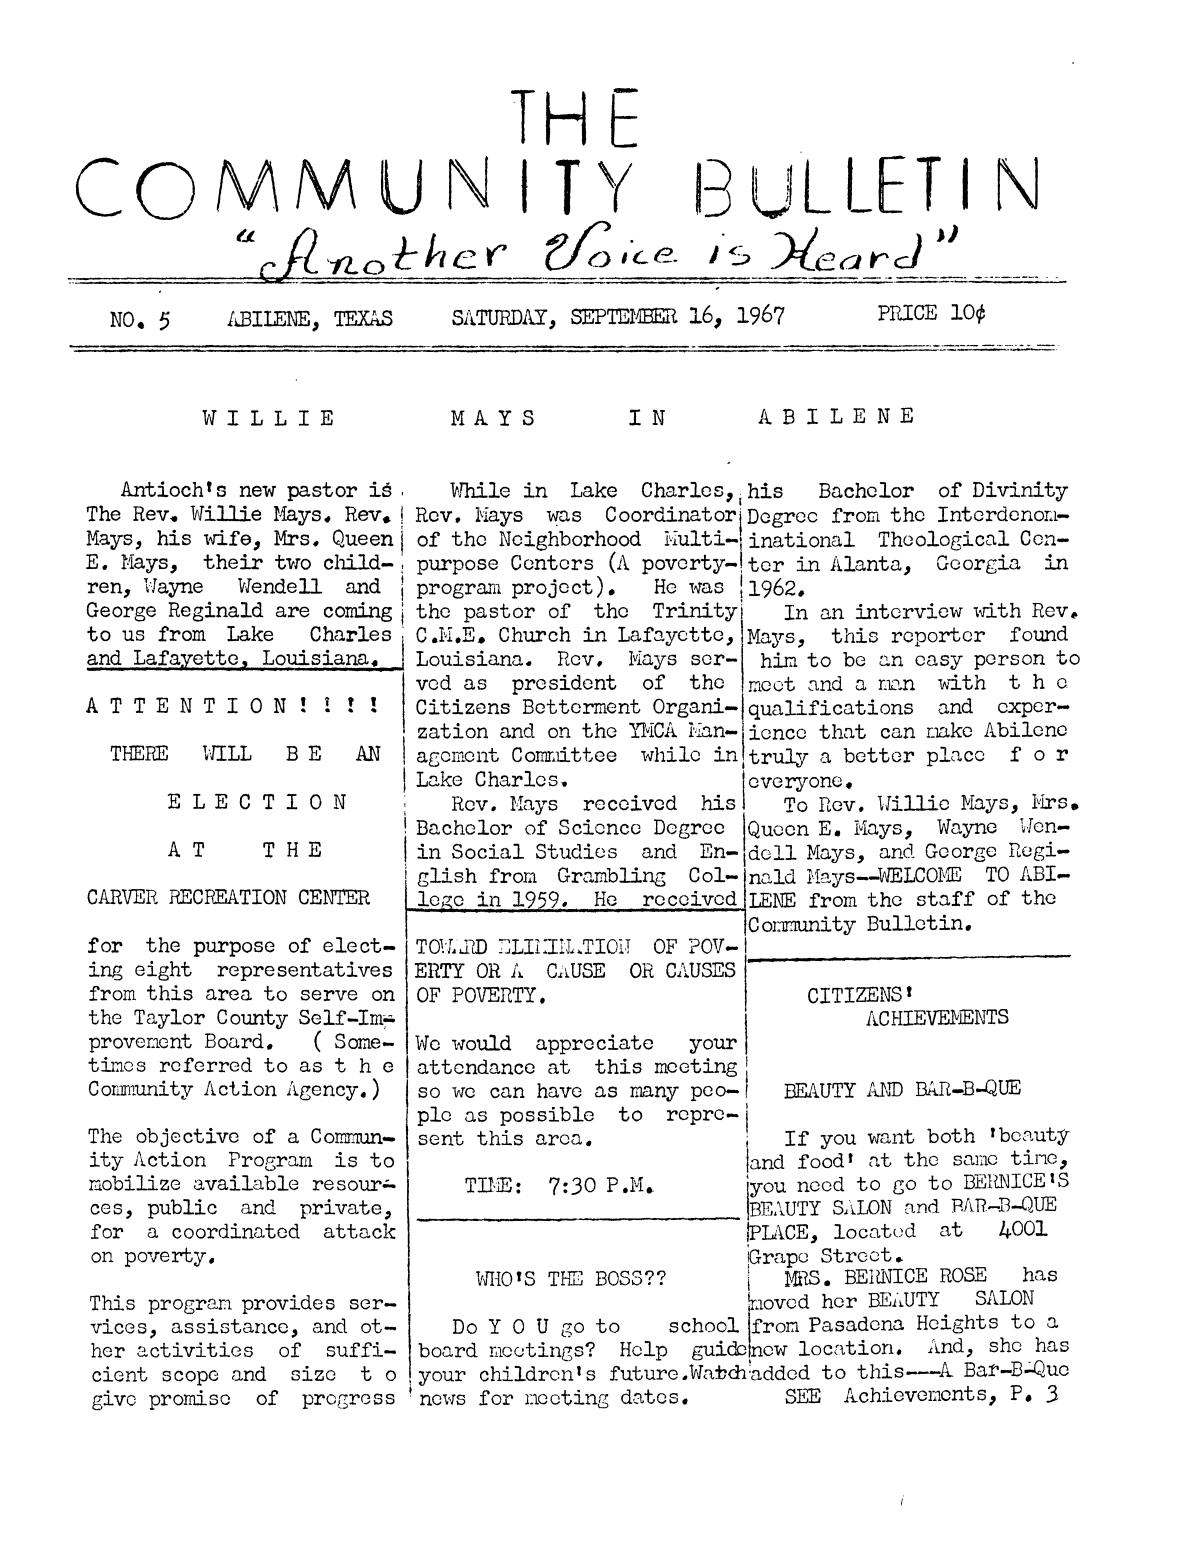 The Community Bulletin (Abilene, Texas), No. 5, Saturday, September 16, 1967
                                                
                                                    1
                                                